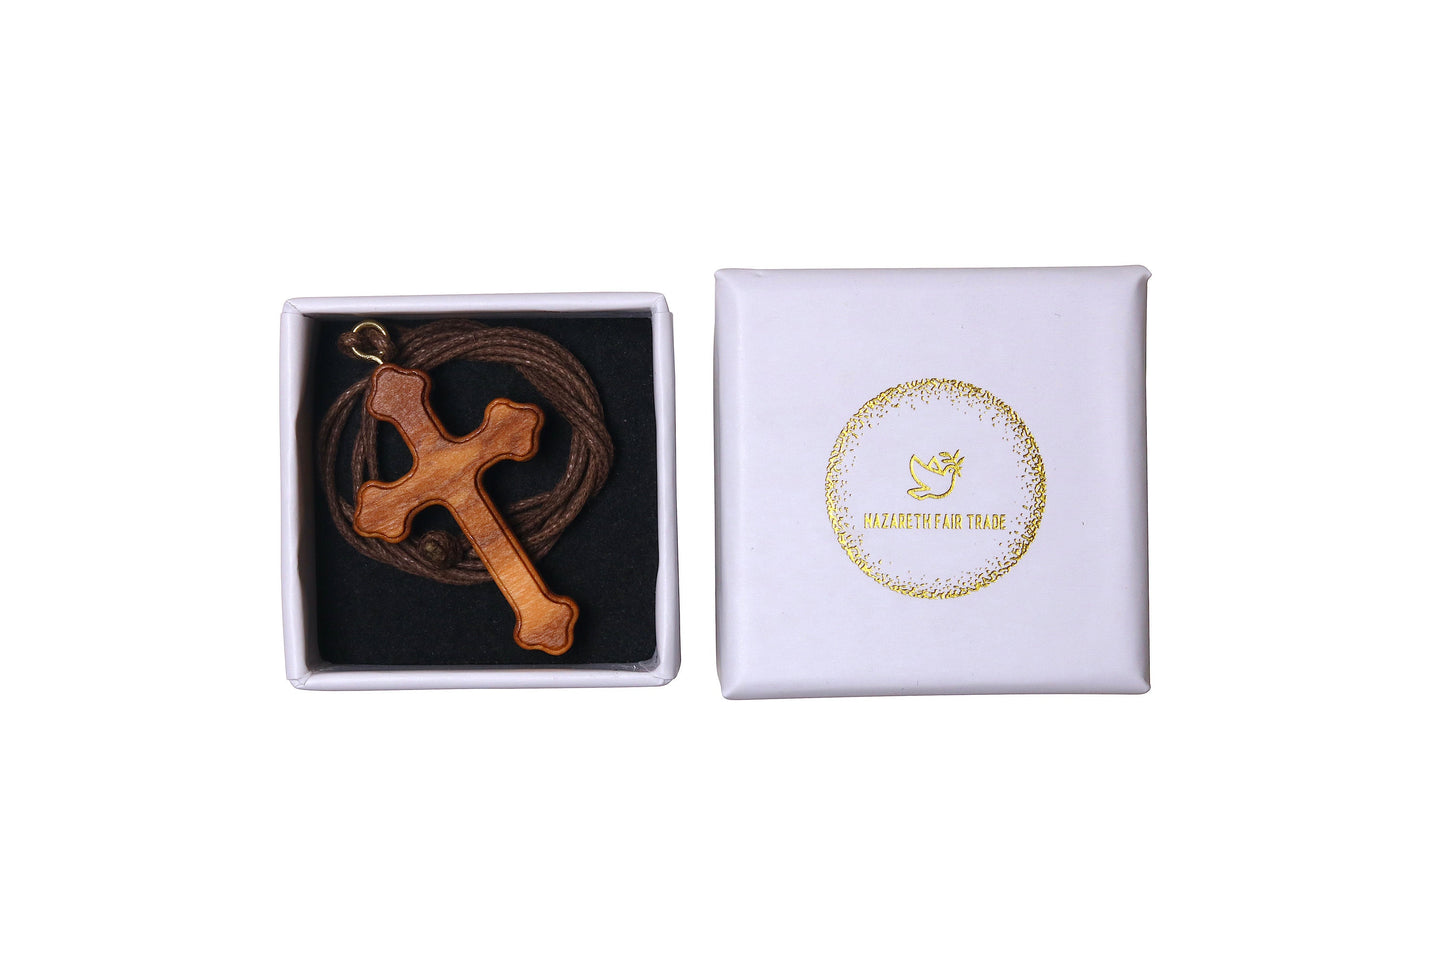 Orthodox cross olive wood necklace pendant handmade in Nazareth For Men, Women, Boys & Girls